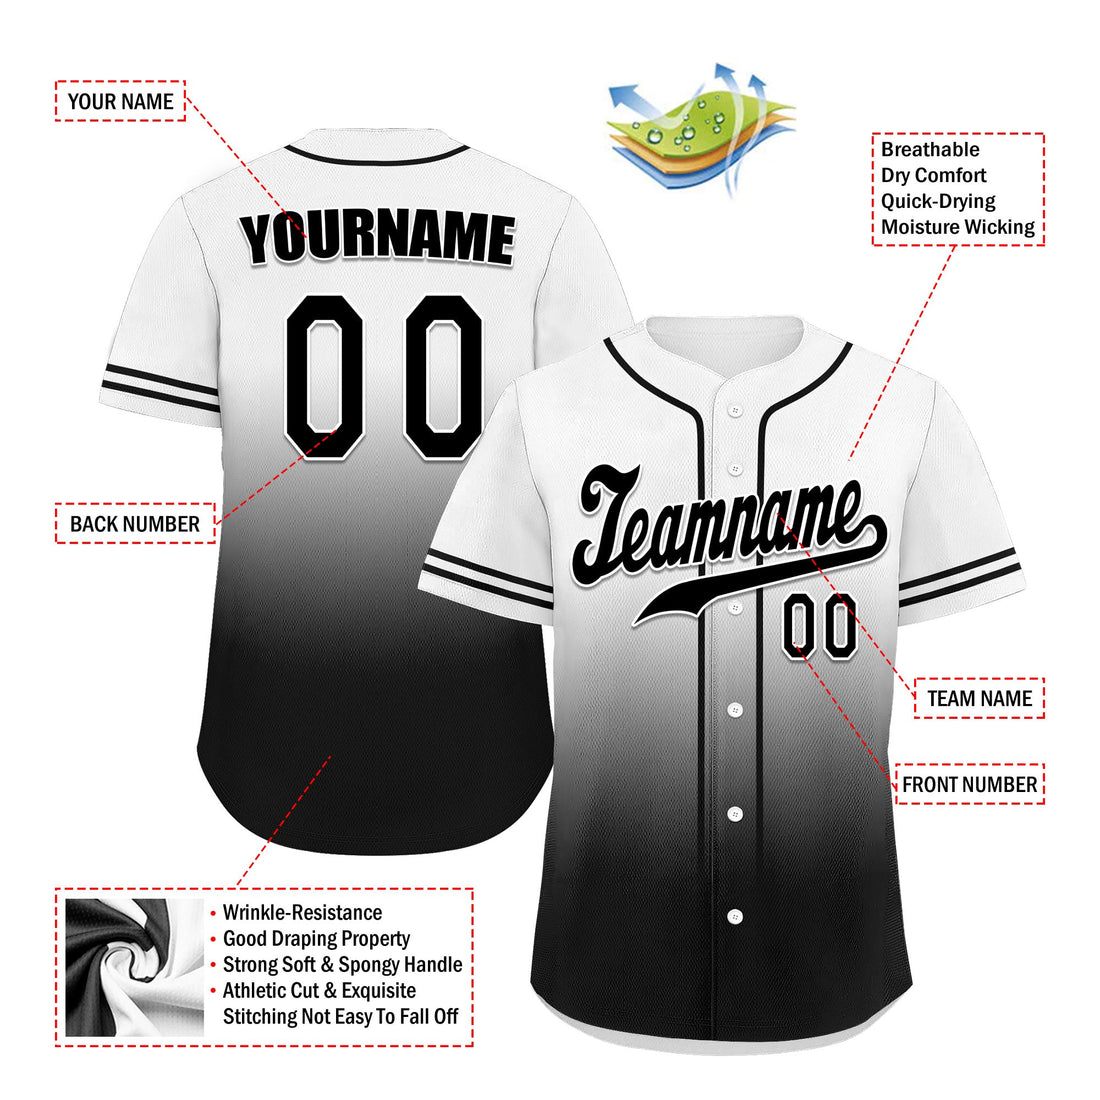 Custom White Black Fade Fashion Personalized Authentic Baseball Jersey UN002-bd0b007b-d